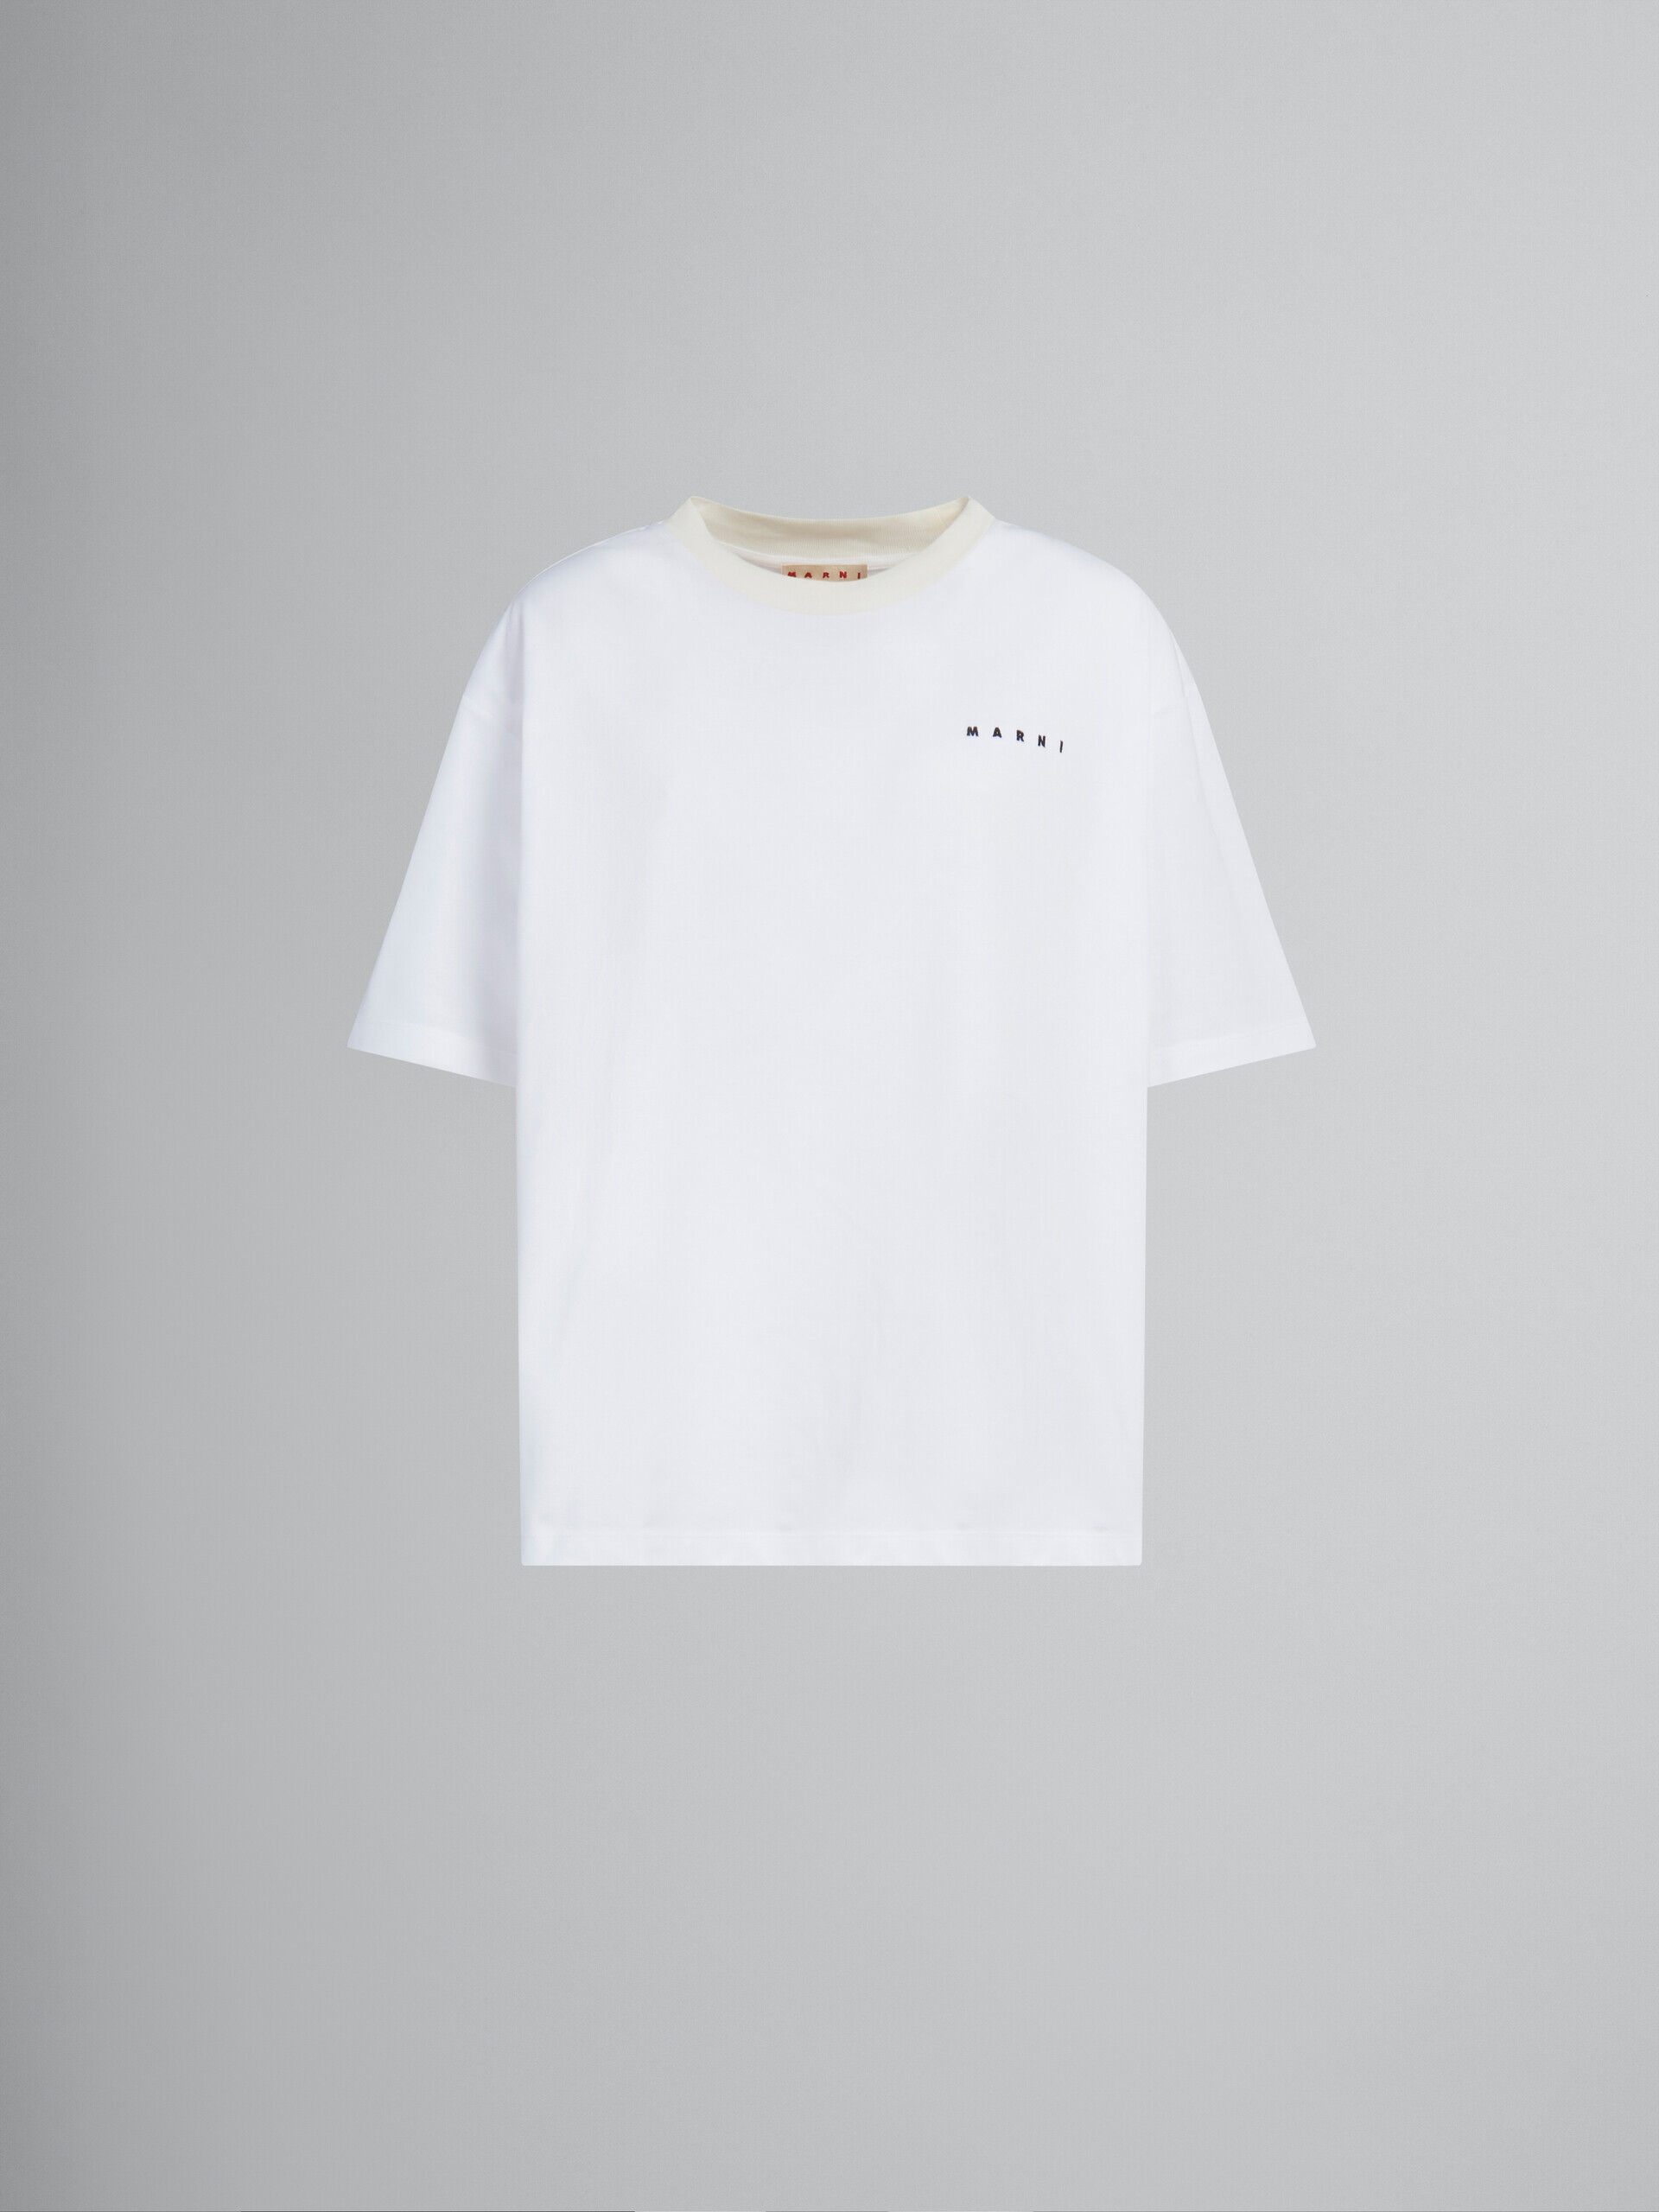 MONSE】white COTTON×MODAL プリントTシャツ - Tシャツ/カットソー 